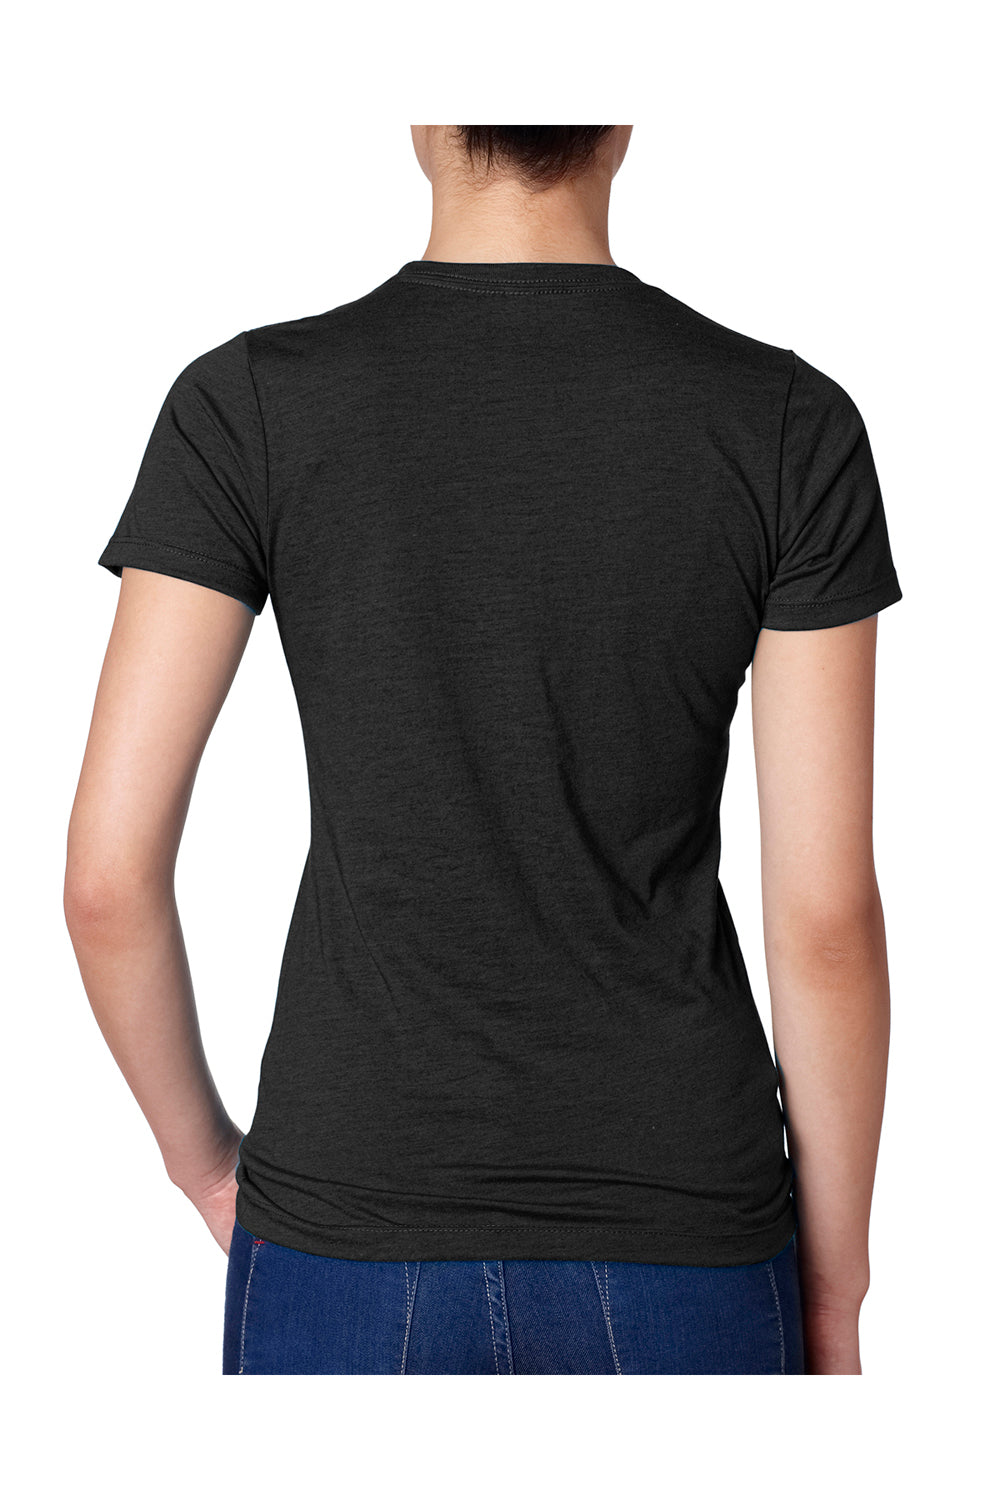 Next Level 6610 Womens CVC Jersey Short Sleeve Crewneck T-Shirt Black Back